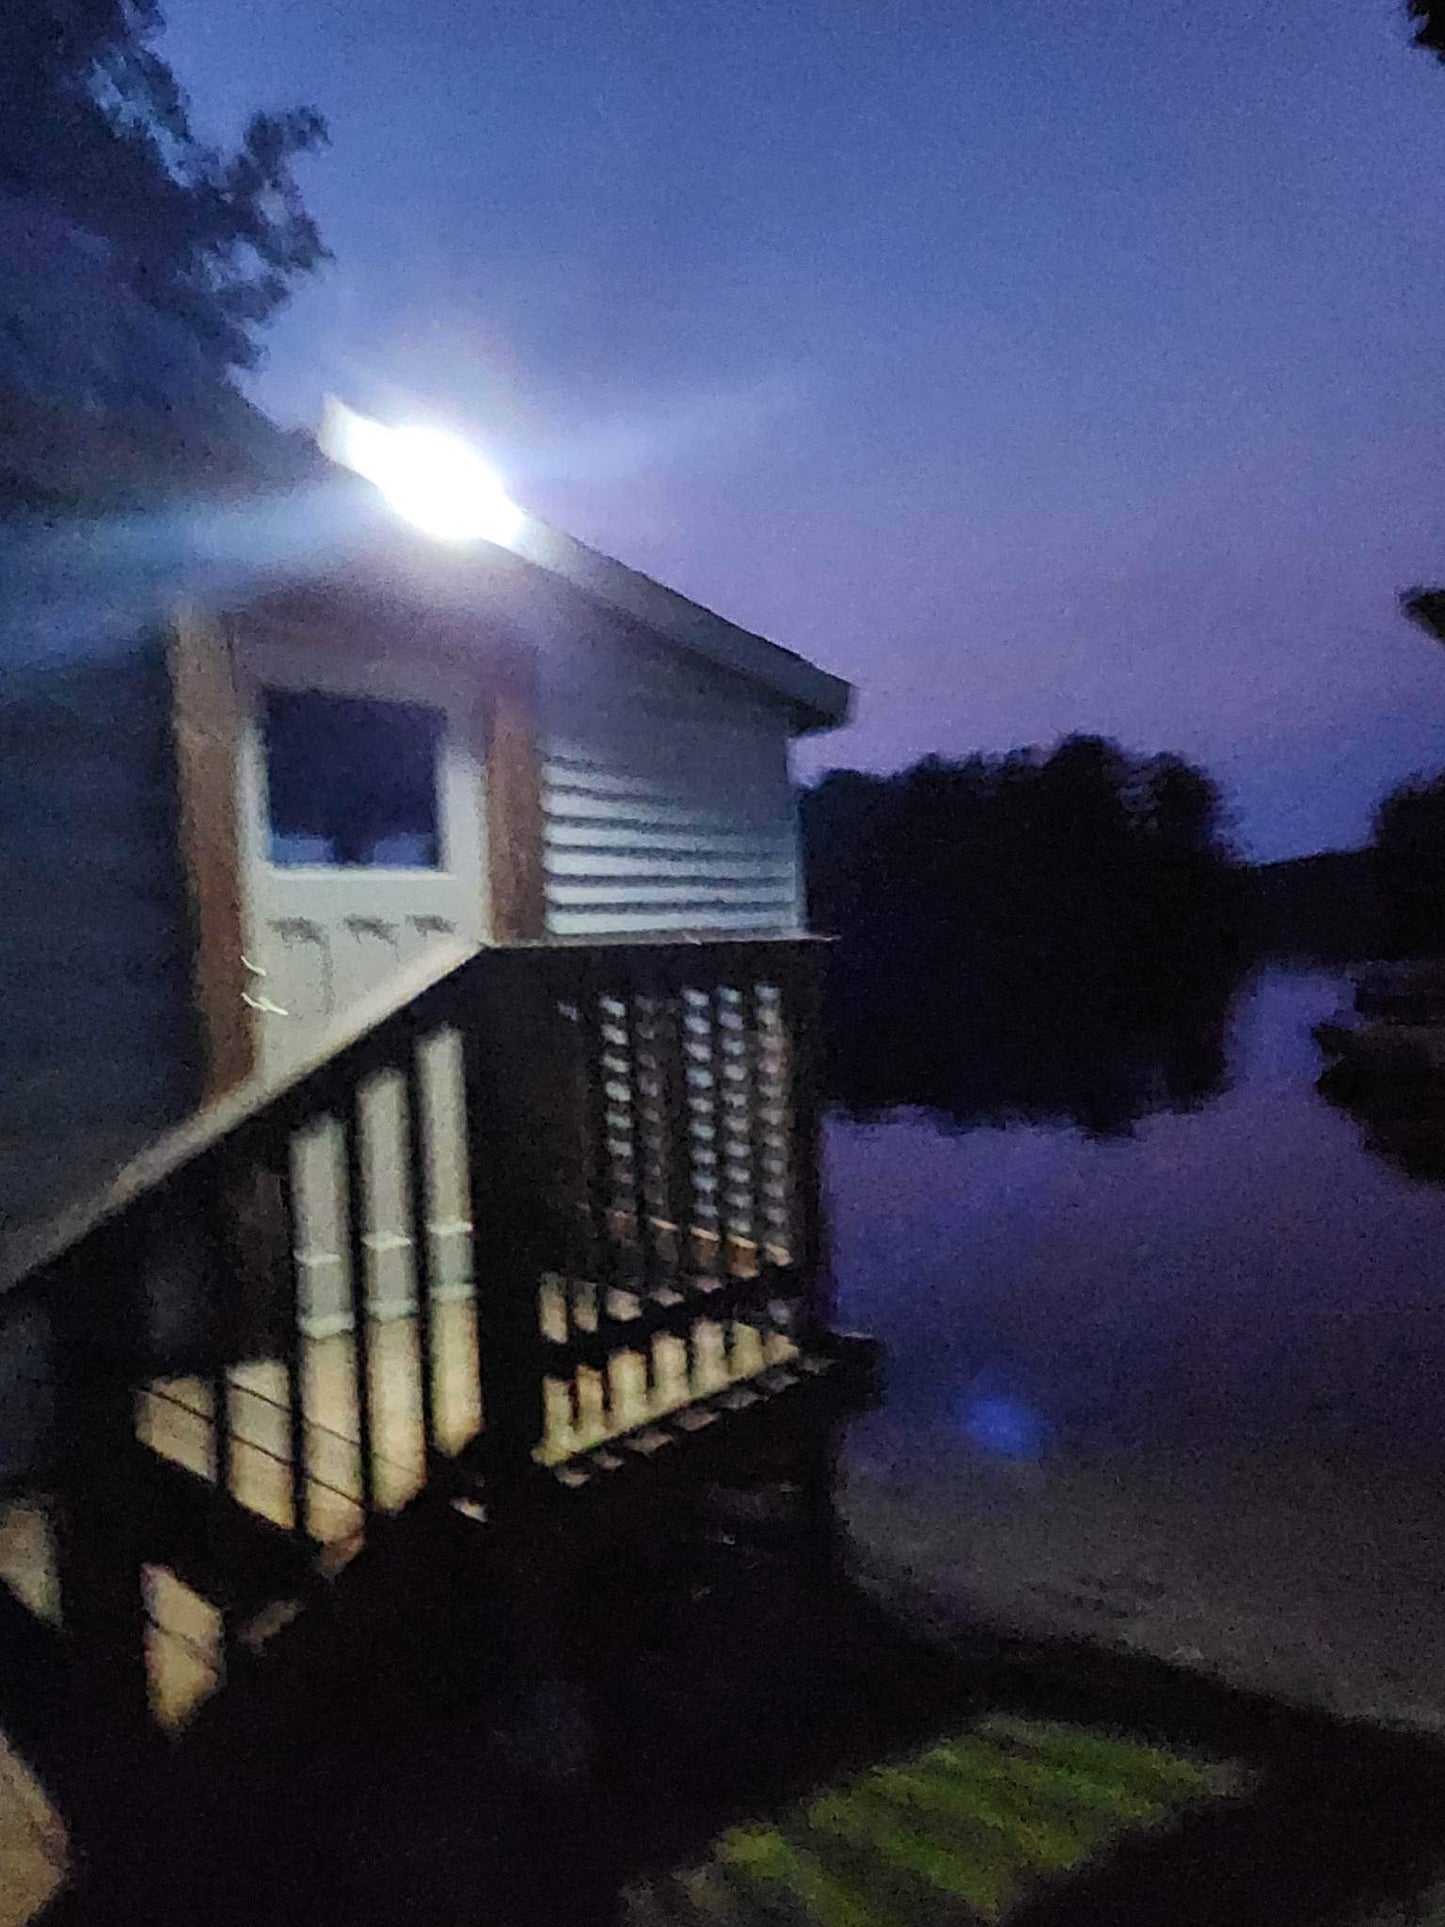 BigM 190 LED Bright Outdoor Solar Security Lights with Motion Sensor illuminates a lakeside cottage at night